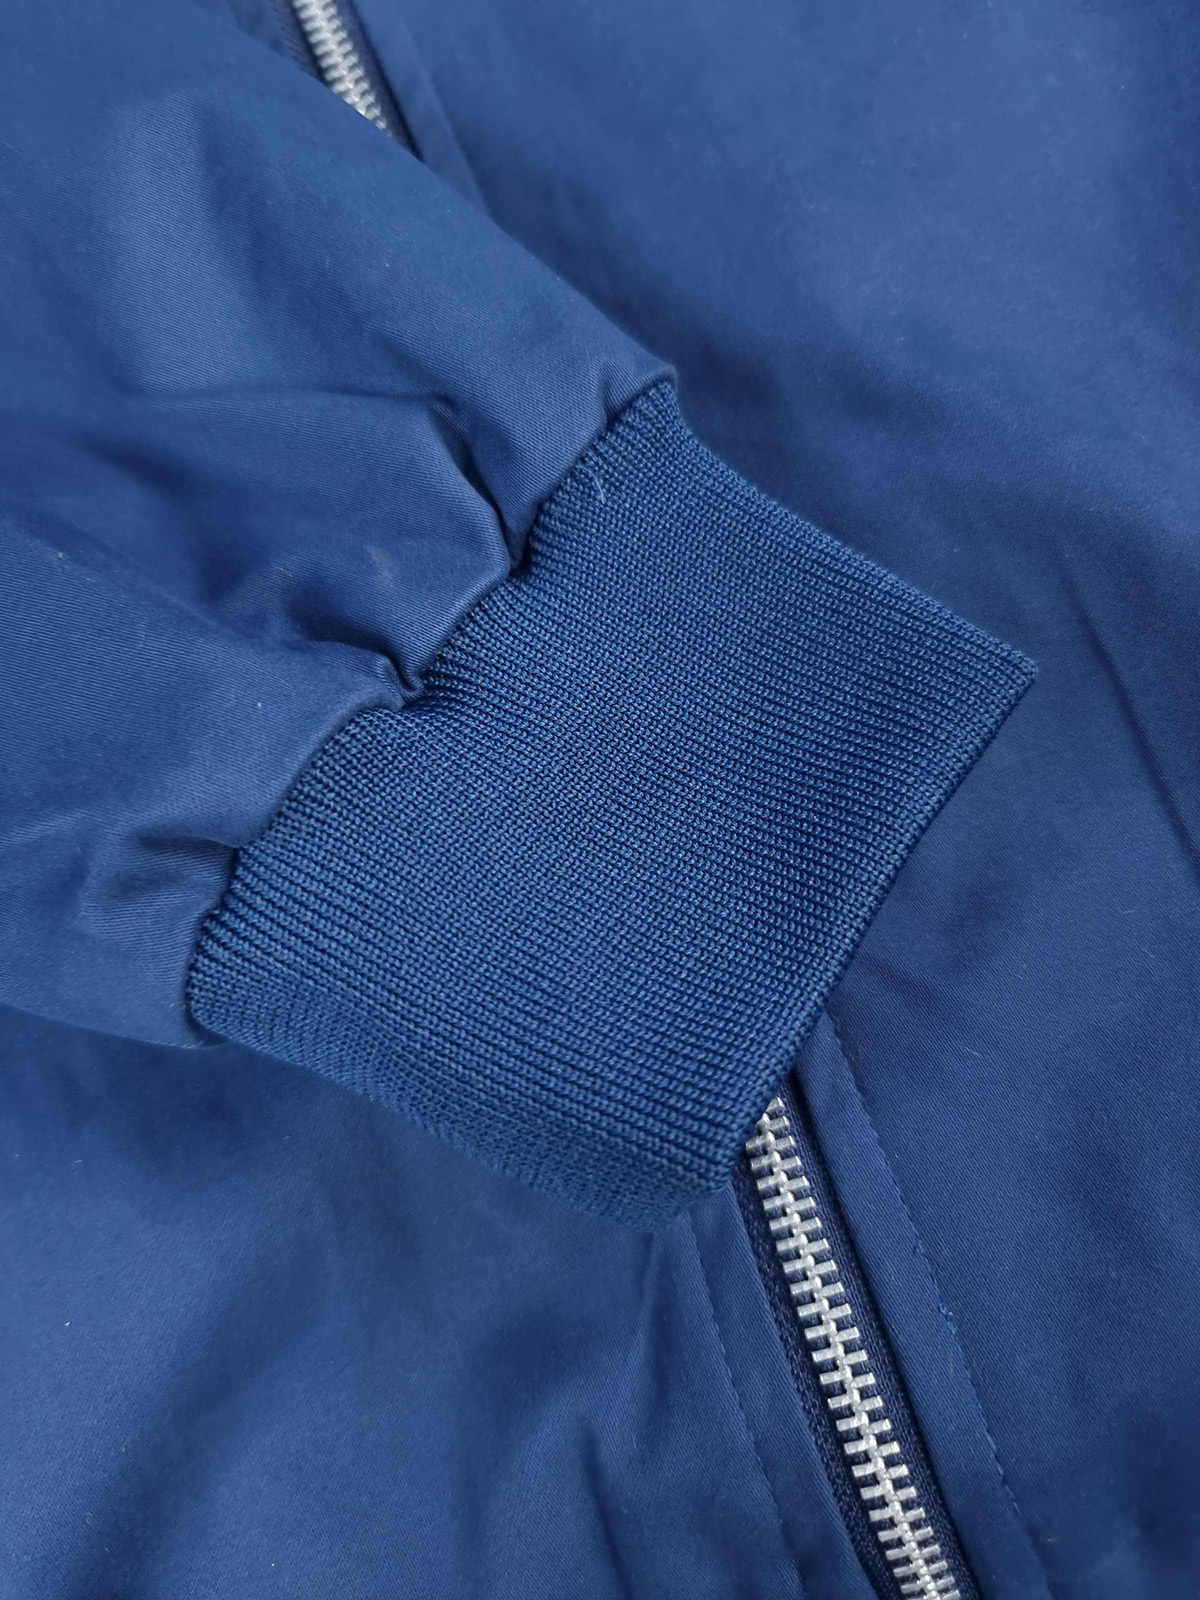 Blue Jacket Beach Boys Inspired – 66 Clothing – Mod Shoes